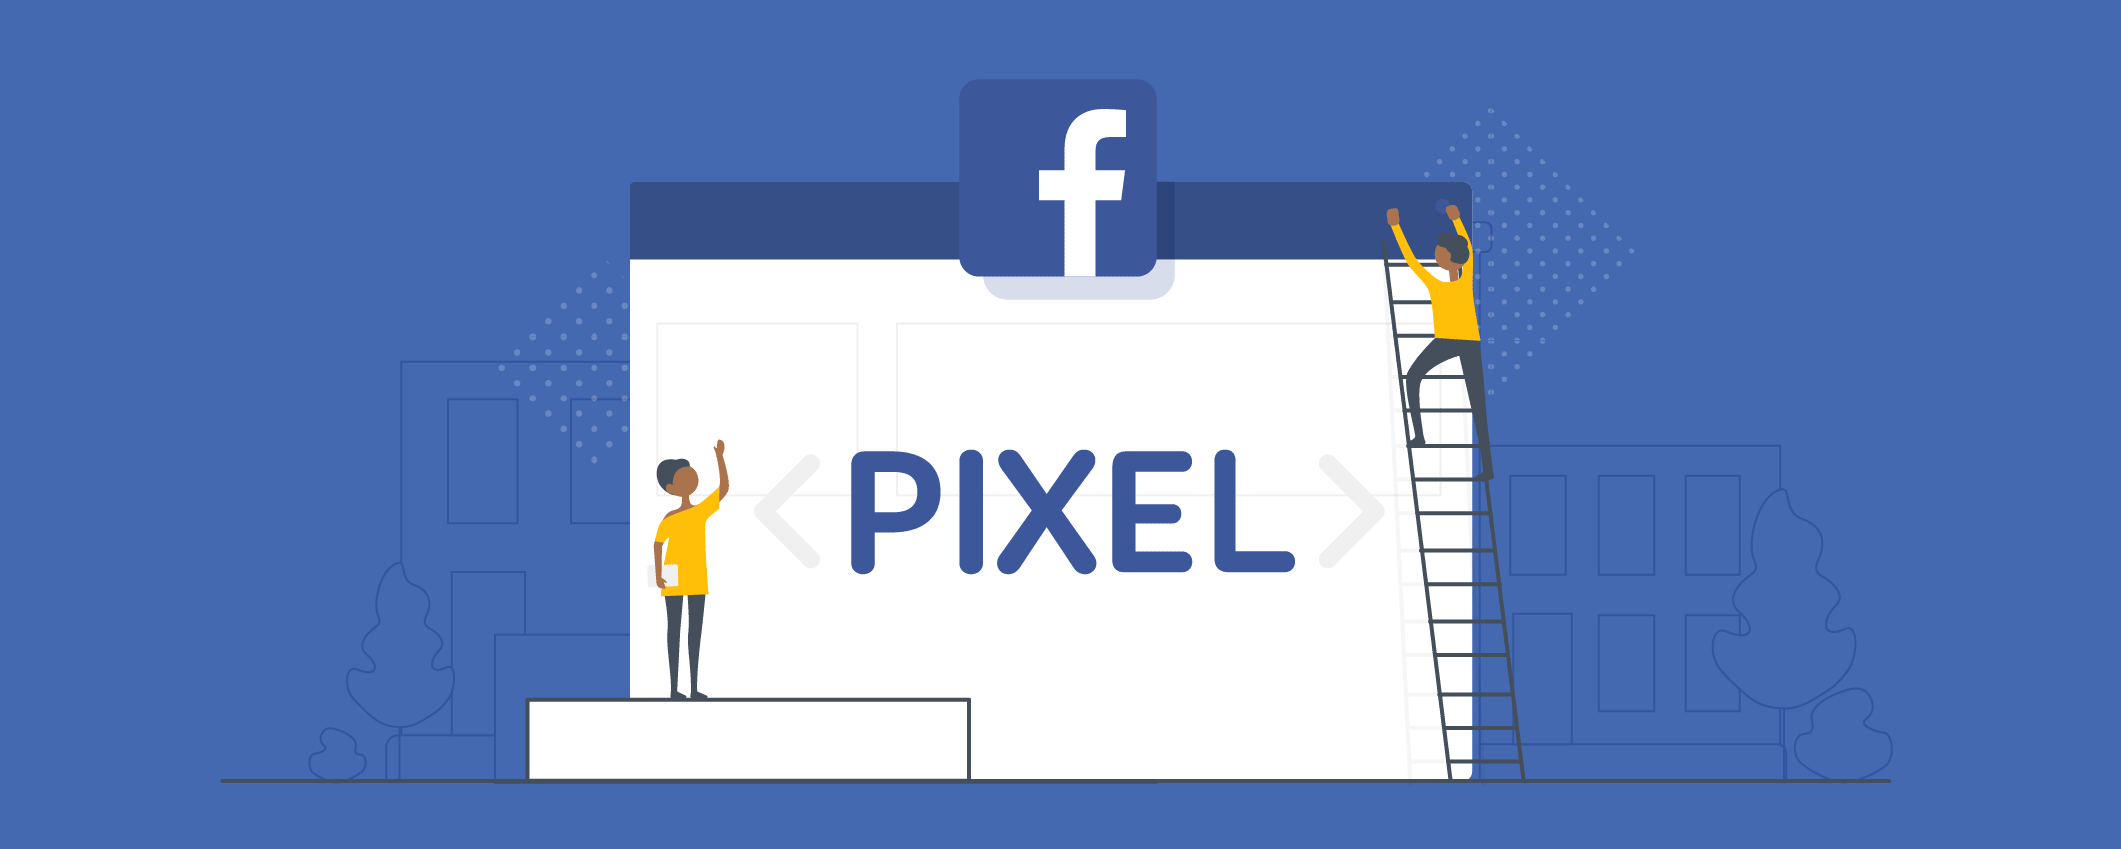 Facebook-Pixel là gì?